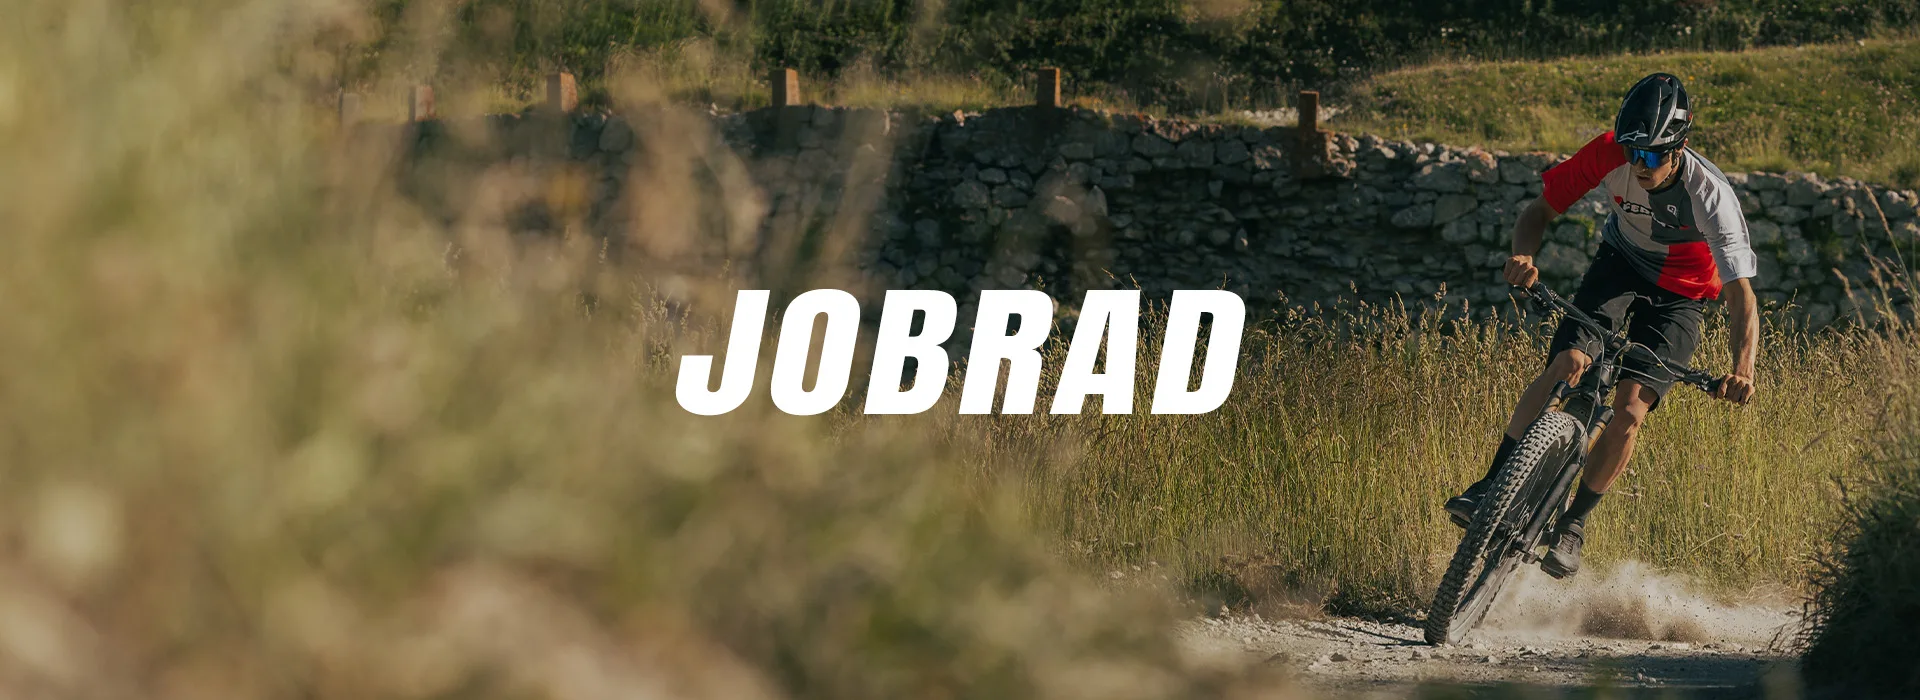 JOBRAD